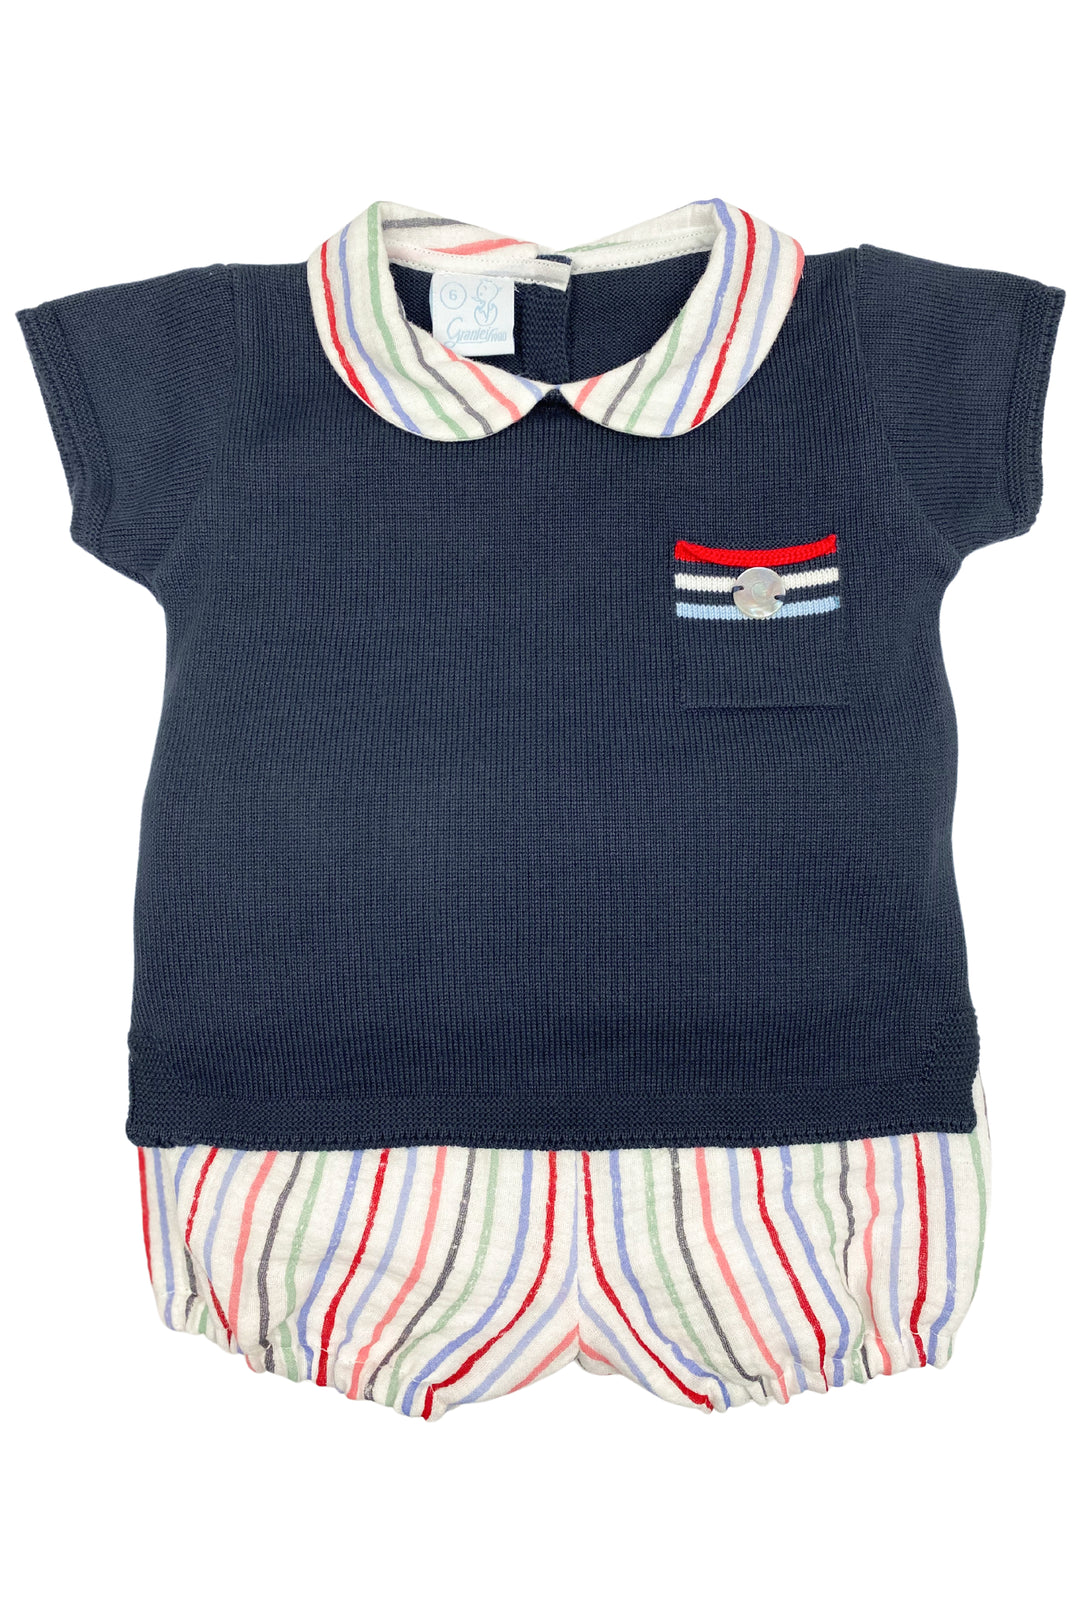 Granlei "Nico" Navy Knit Top & Striped Jam Pants | Millie and John